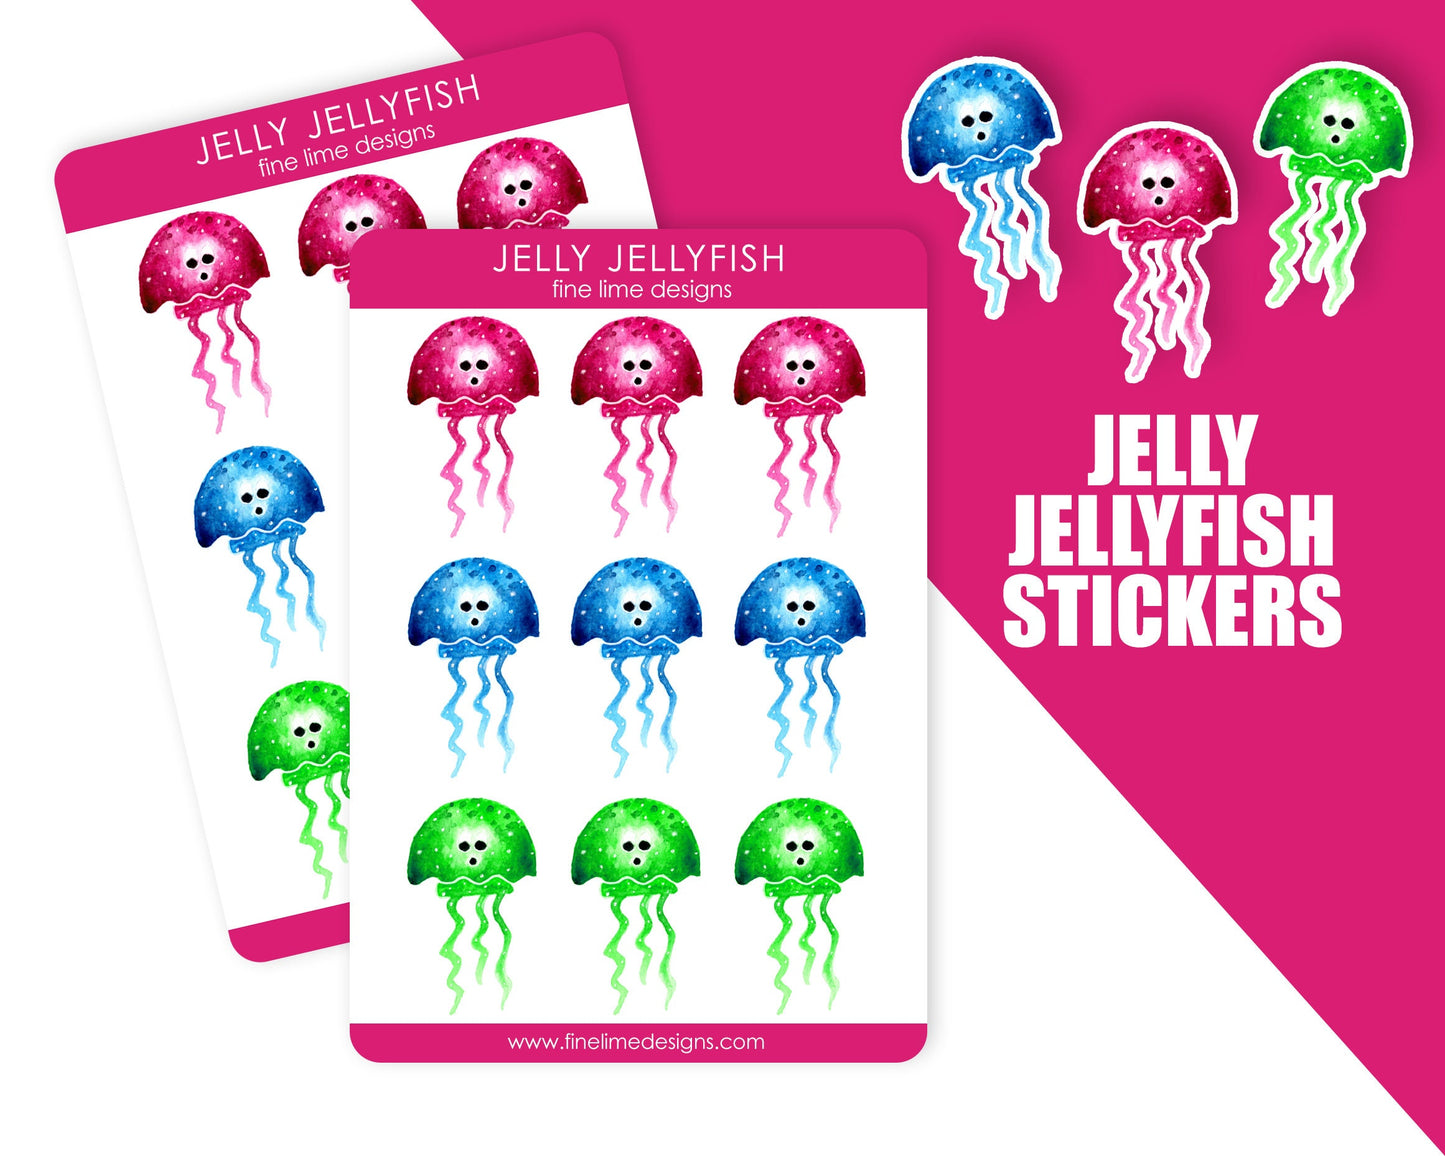 Jelly Jellyfish sticker sheet